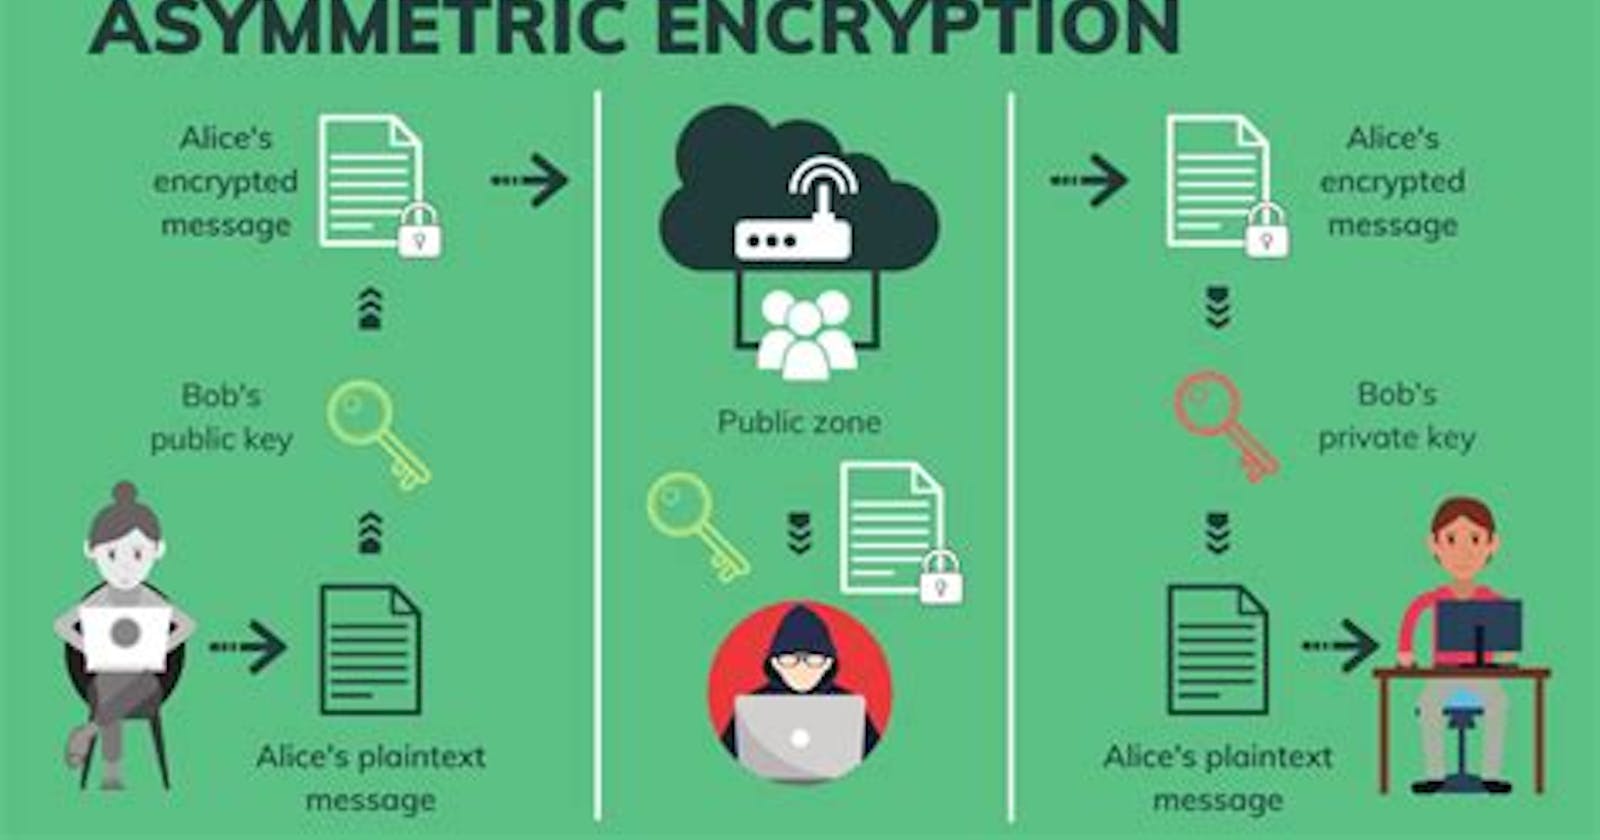 Cryptography|TryHackMe|Task3:Asymmetric Encryption